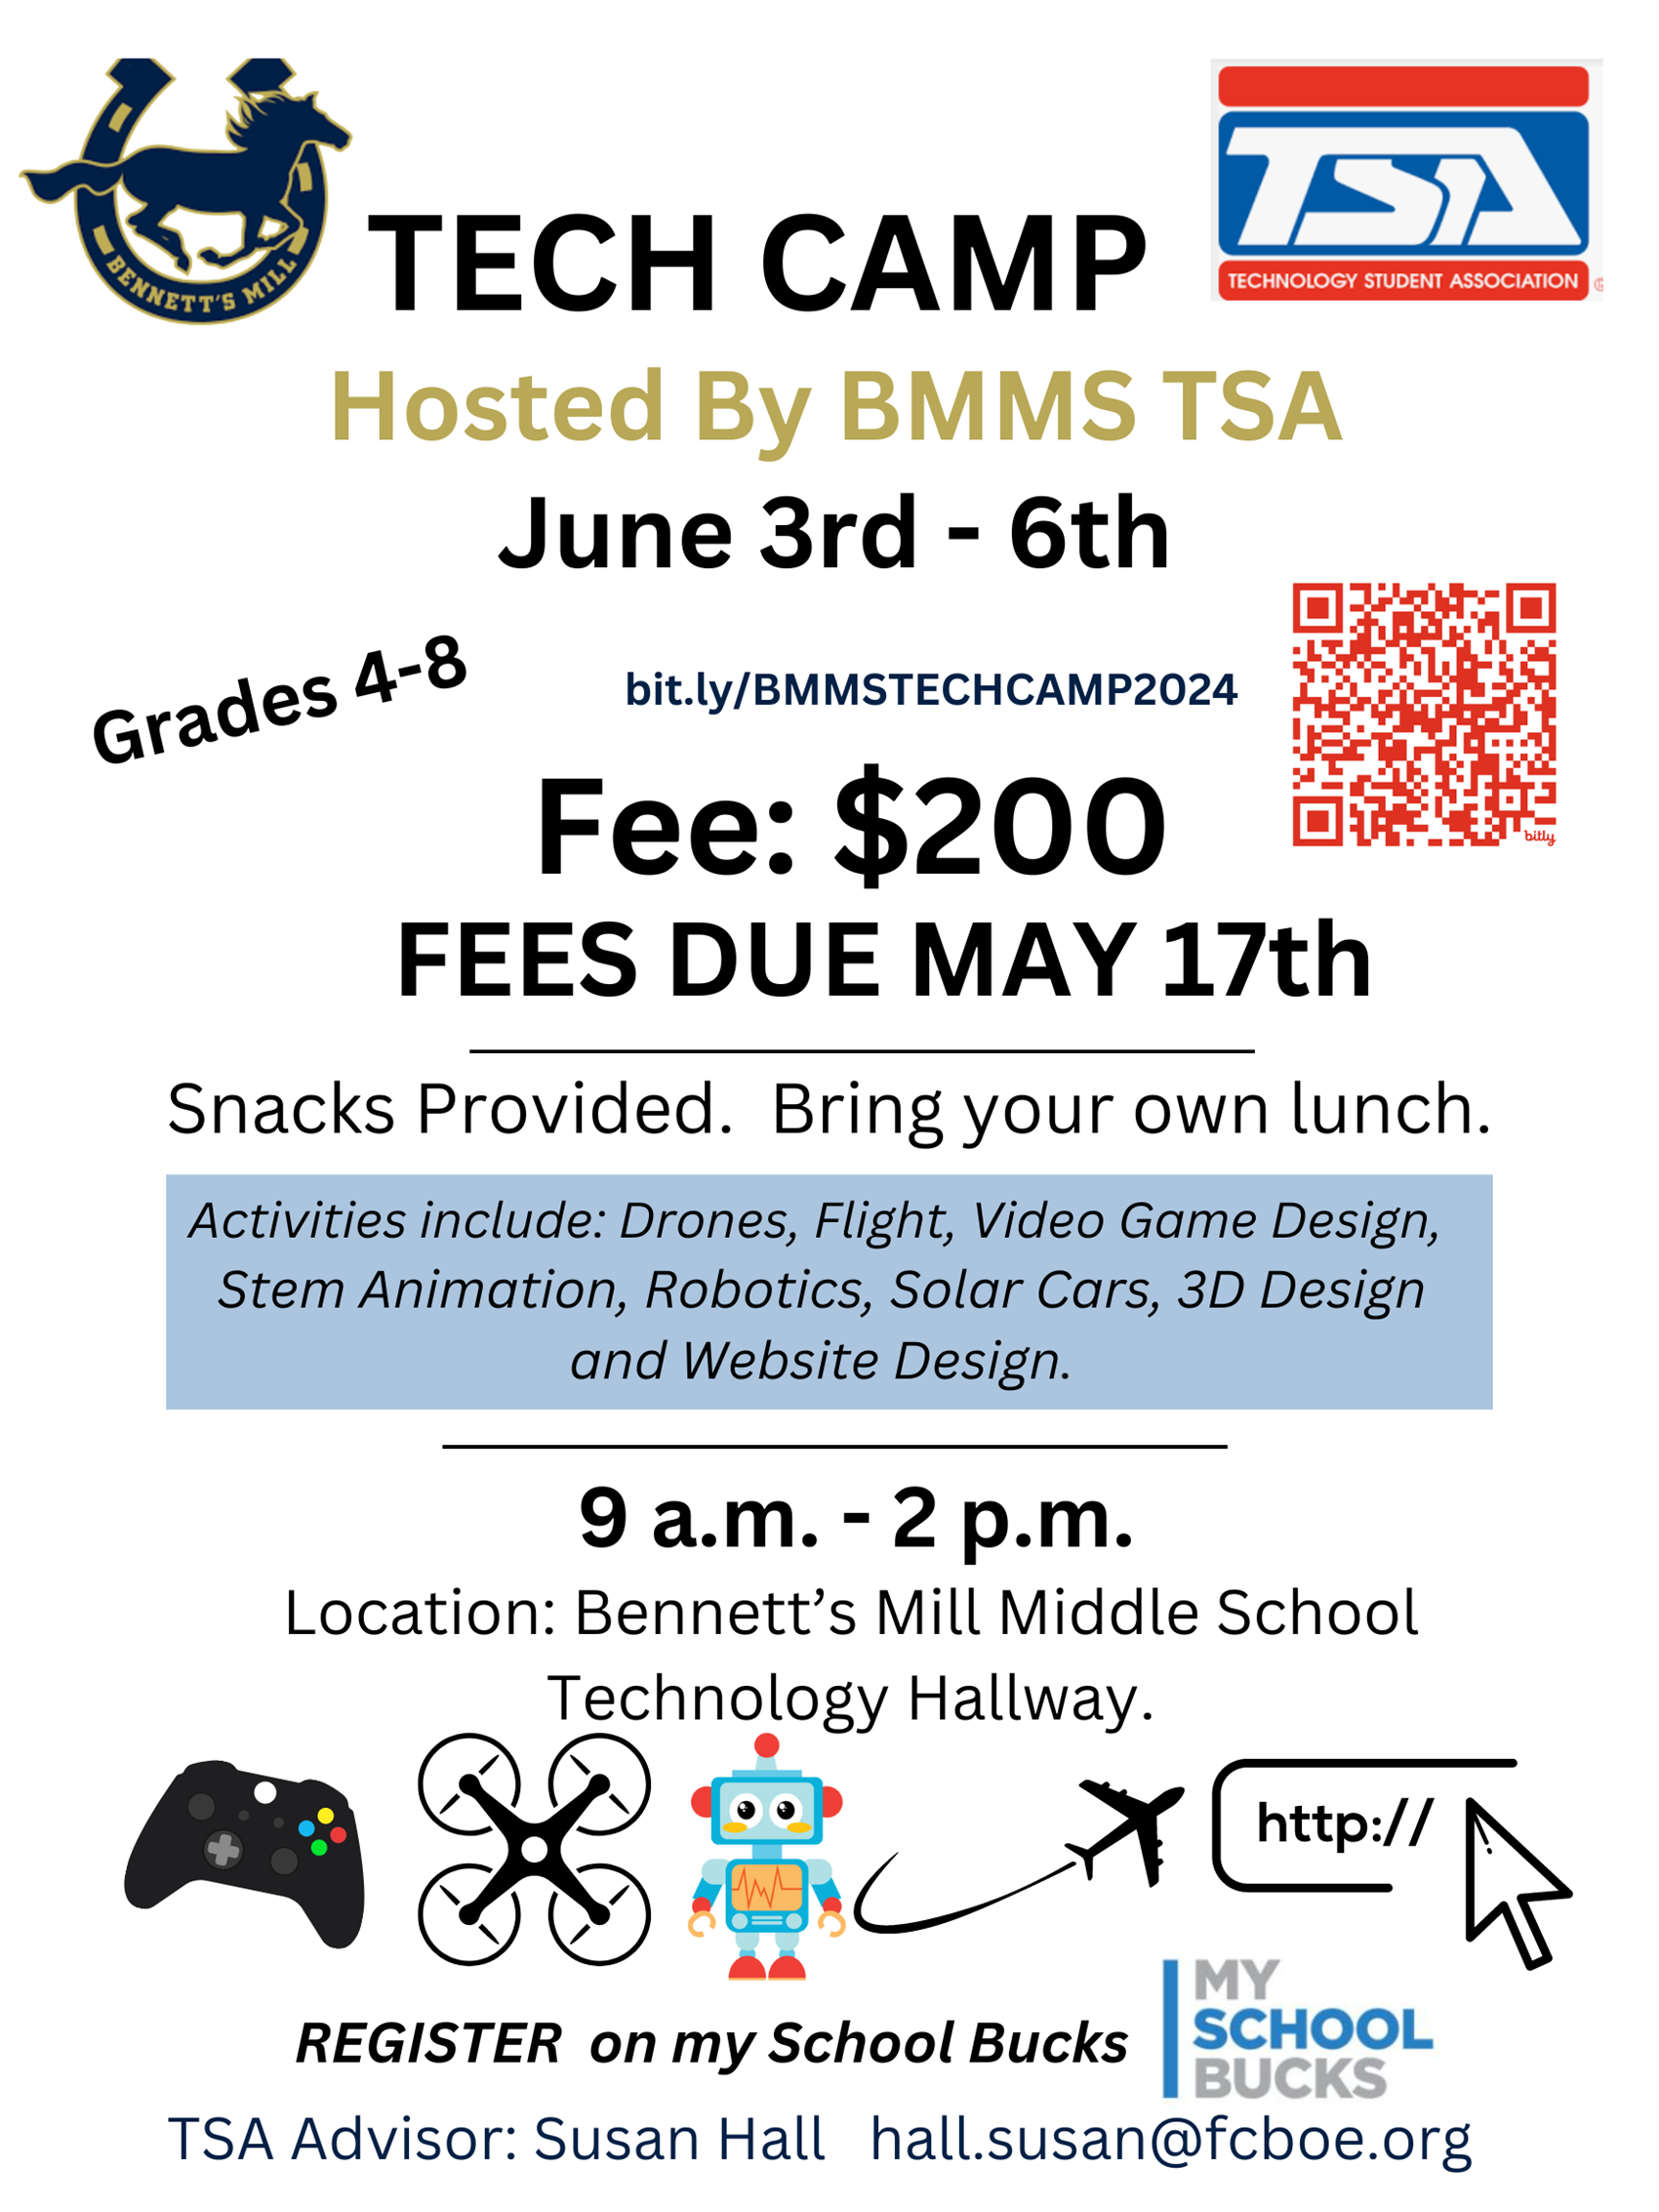  Tech Camp Information